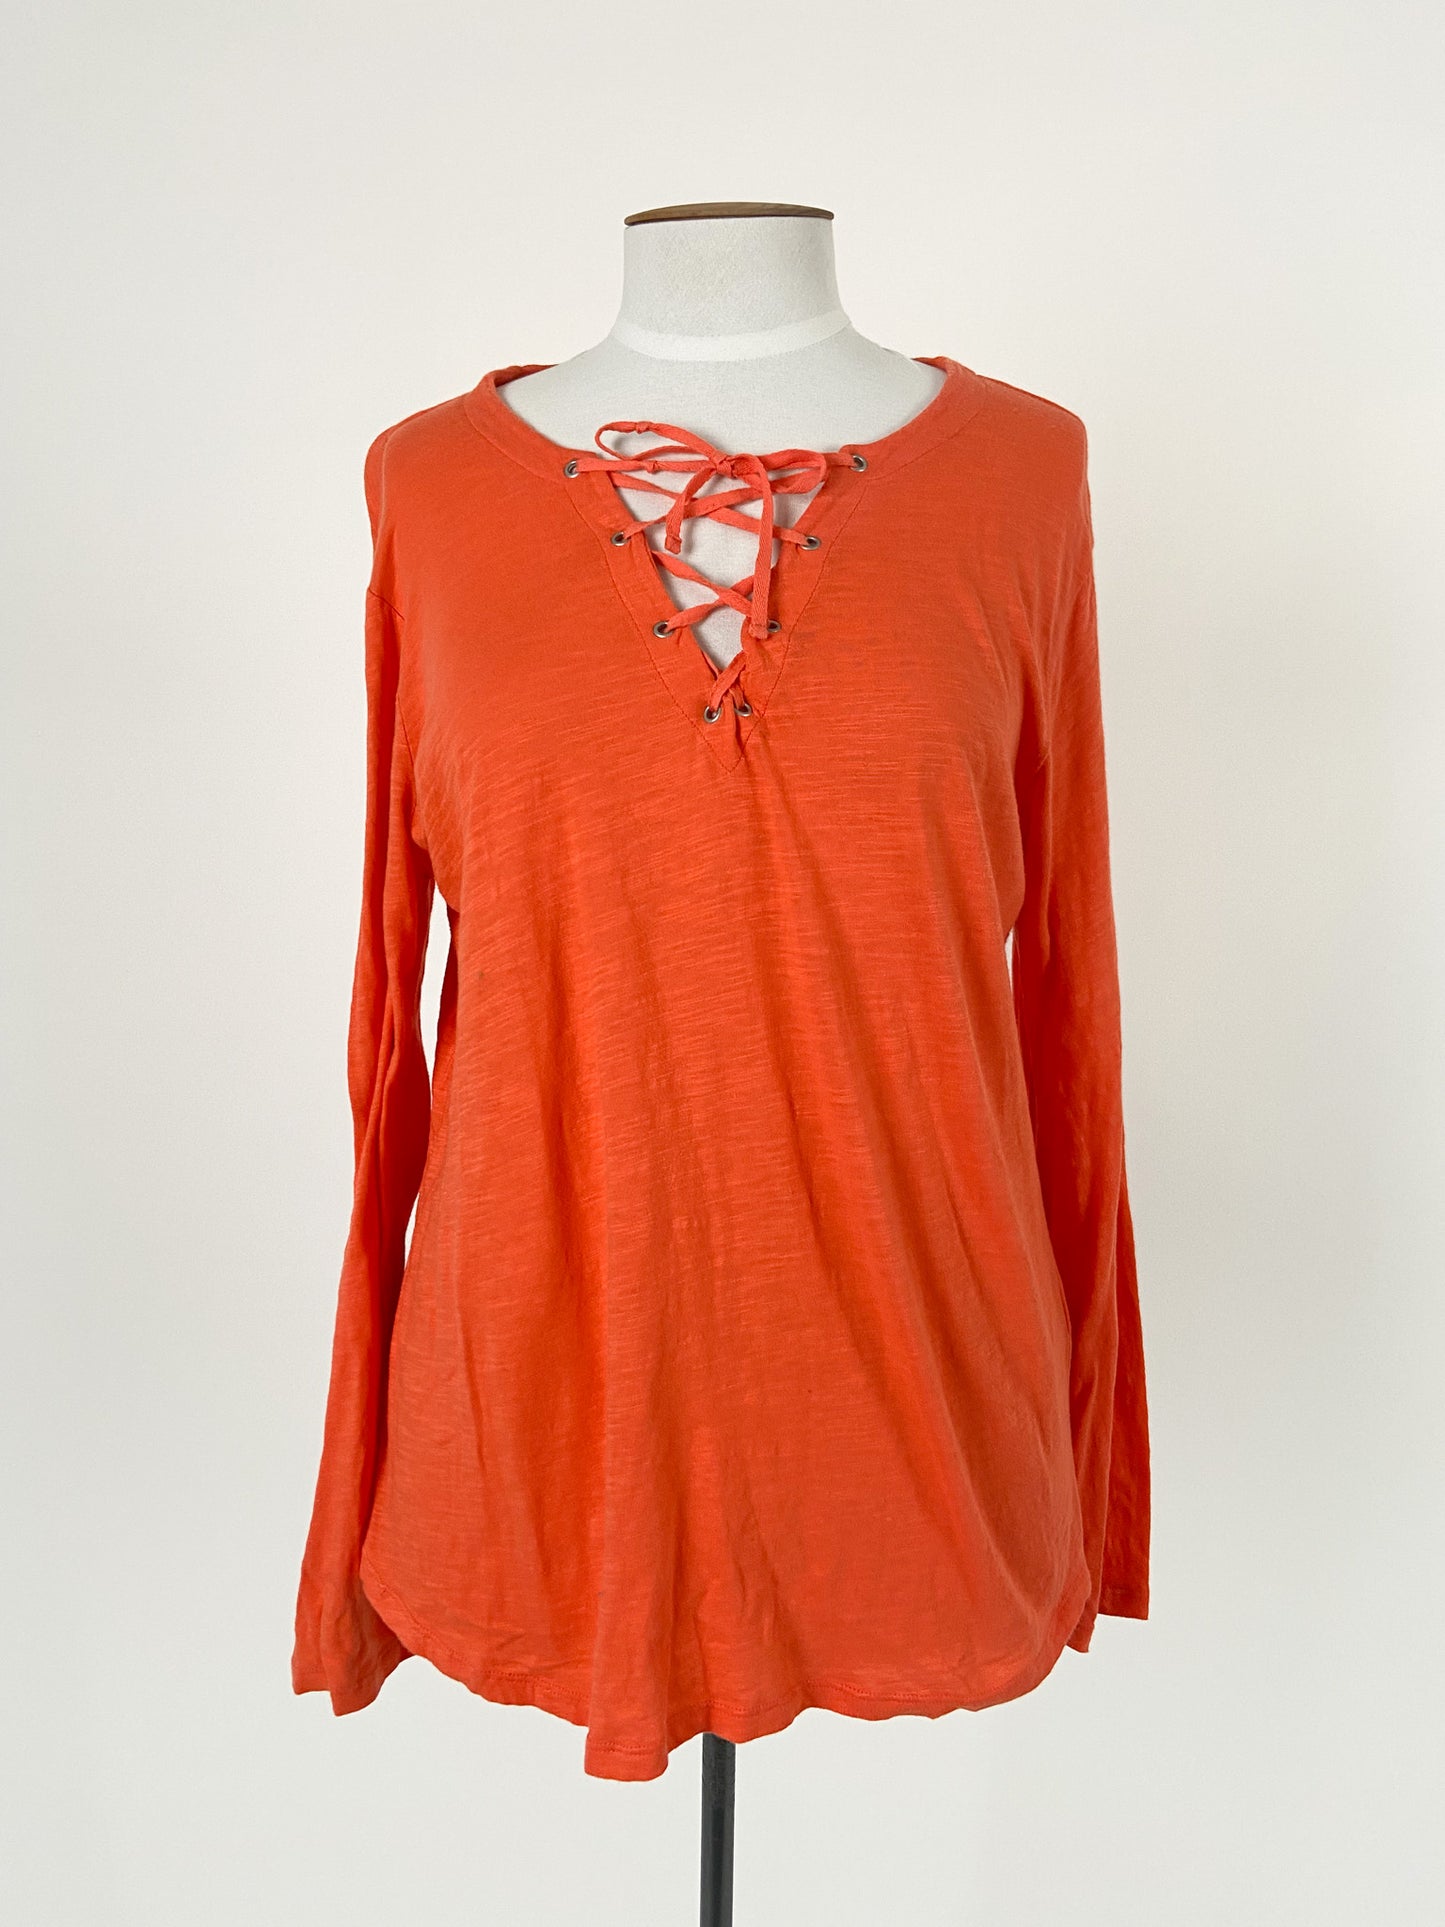 Memo Paris | Orange Casual/Workwear Top | Size L